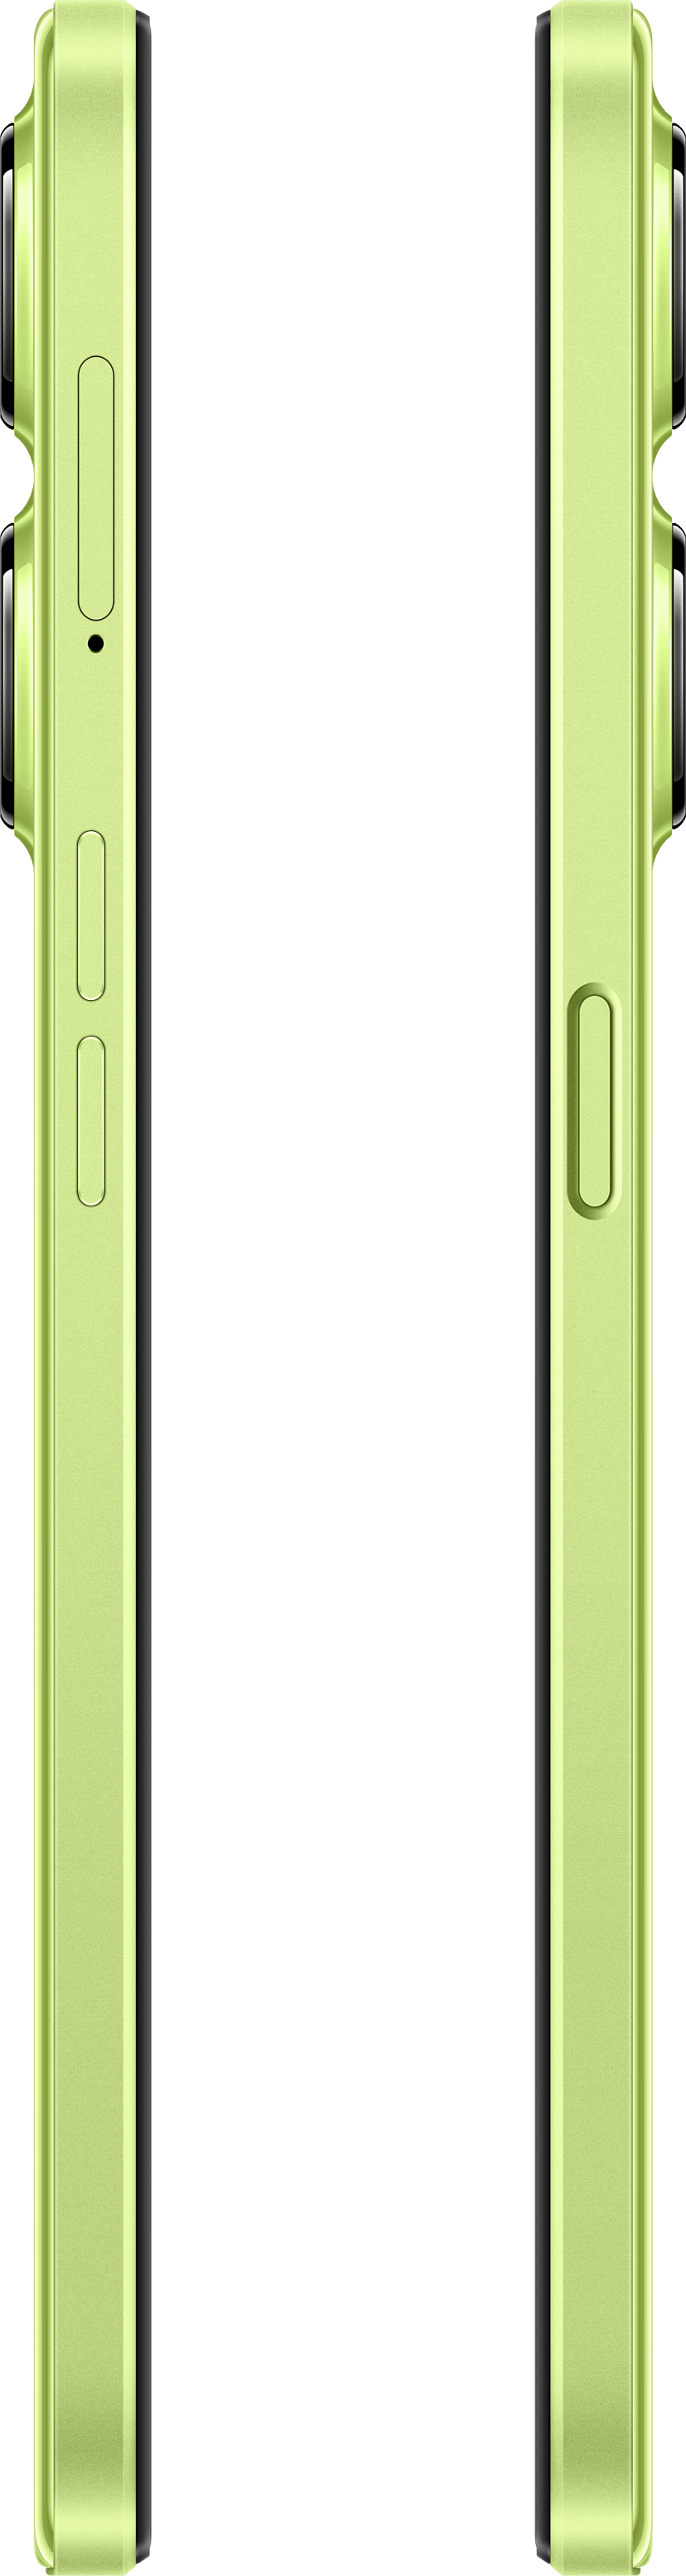 OnePlus Nord CE 3 Lite 128GB Kaksois-SIM Pastelli limetinvihreä